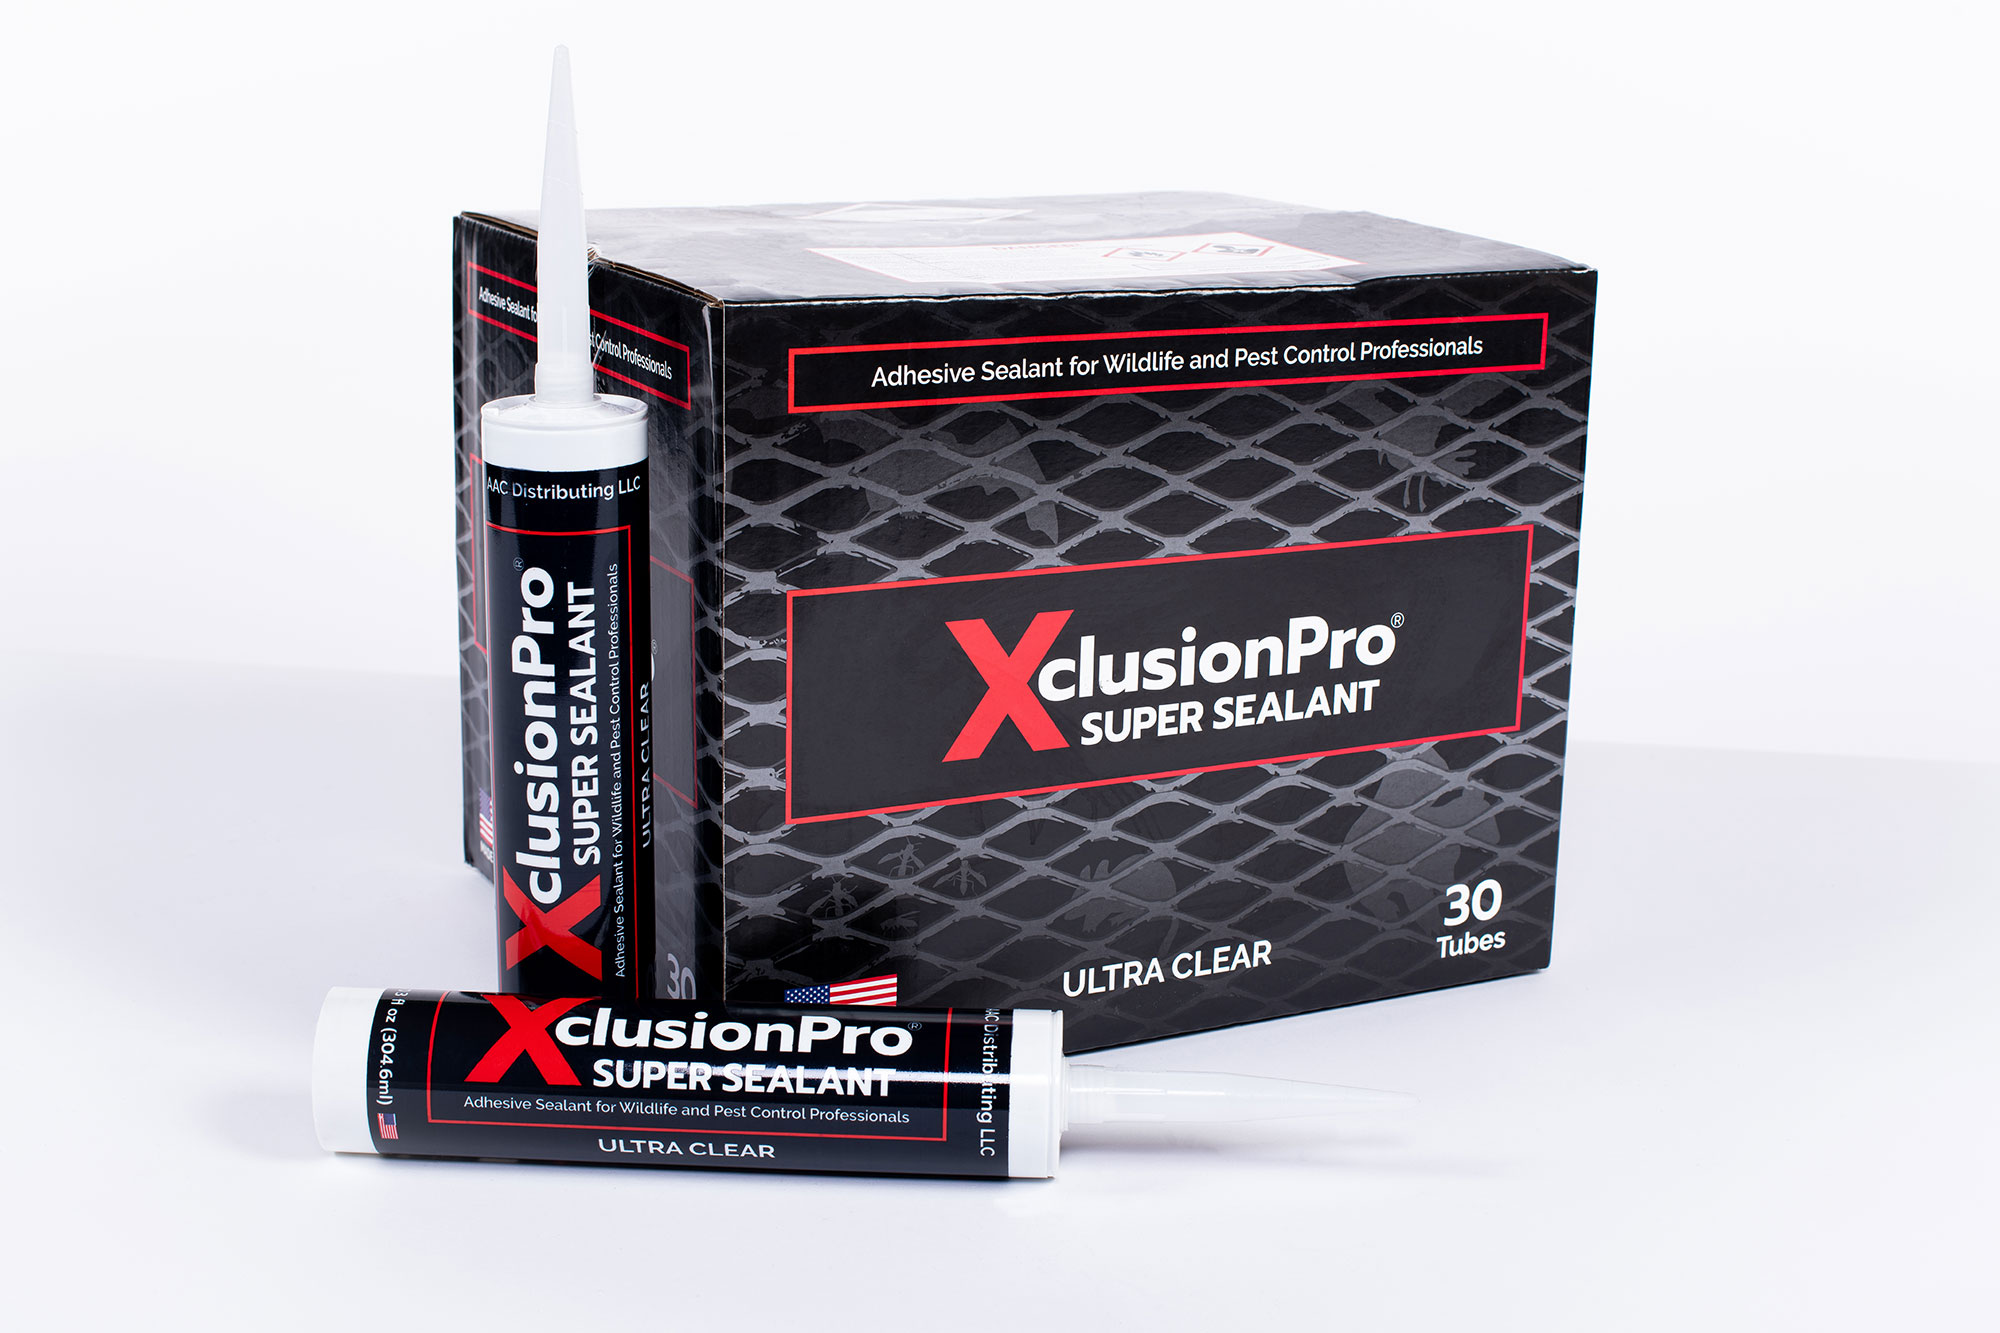 XclusionPro® Super Sealant box of 30 tubes